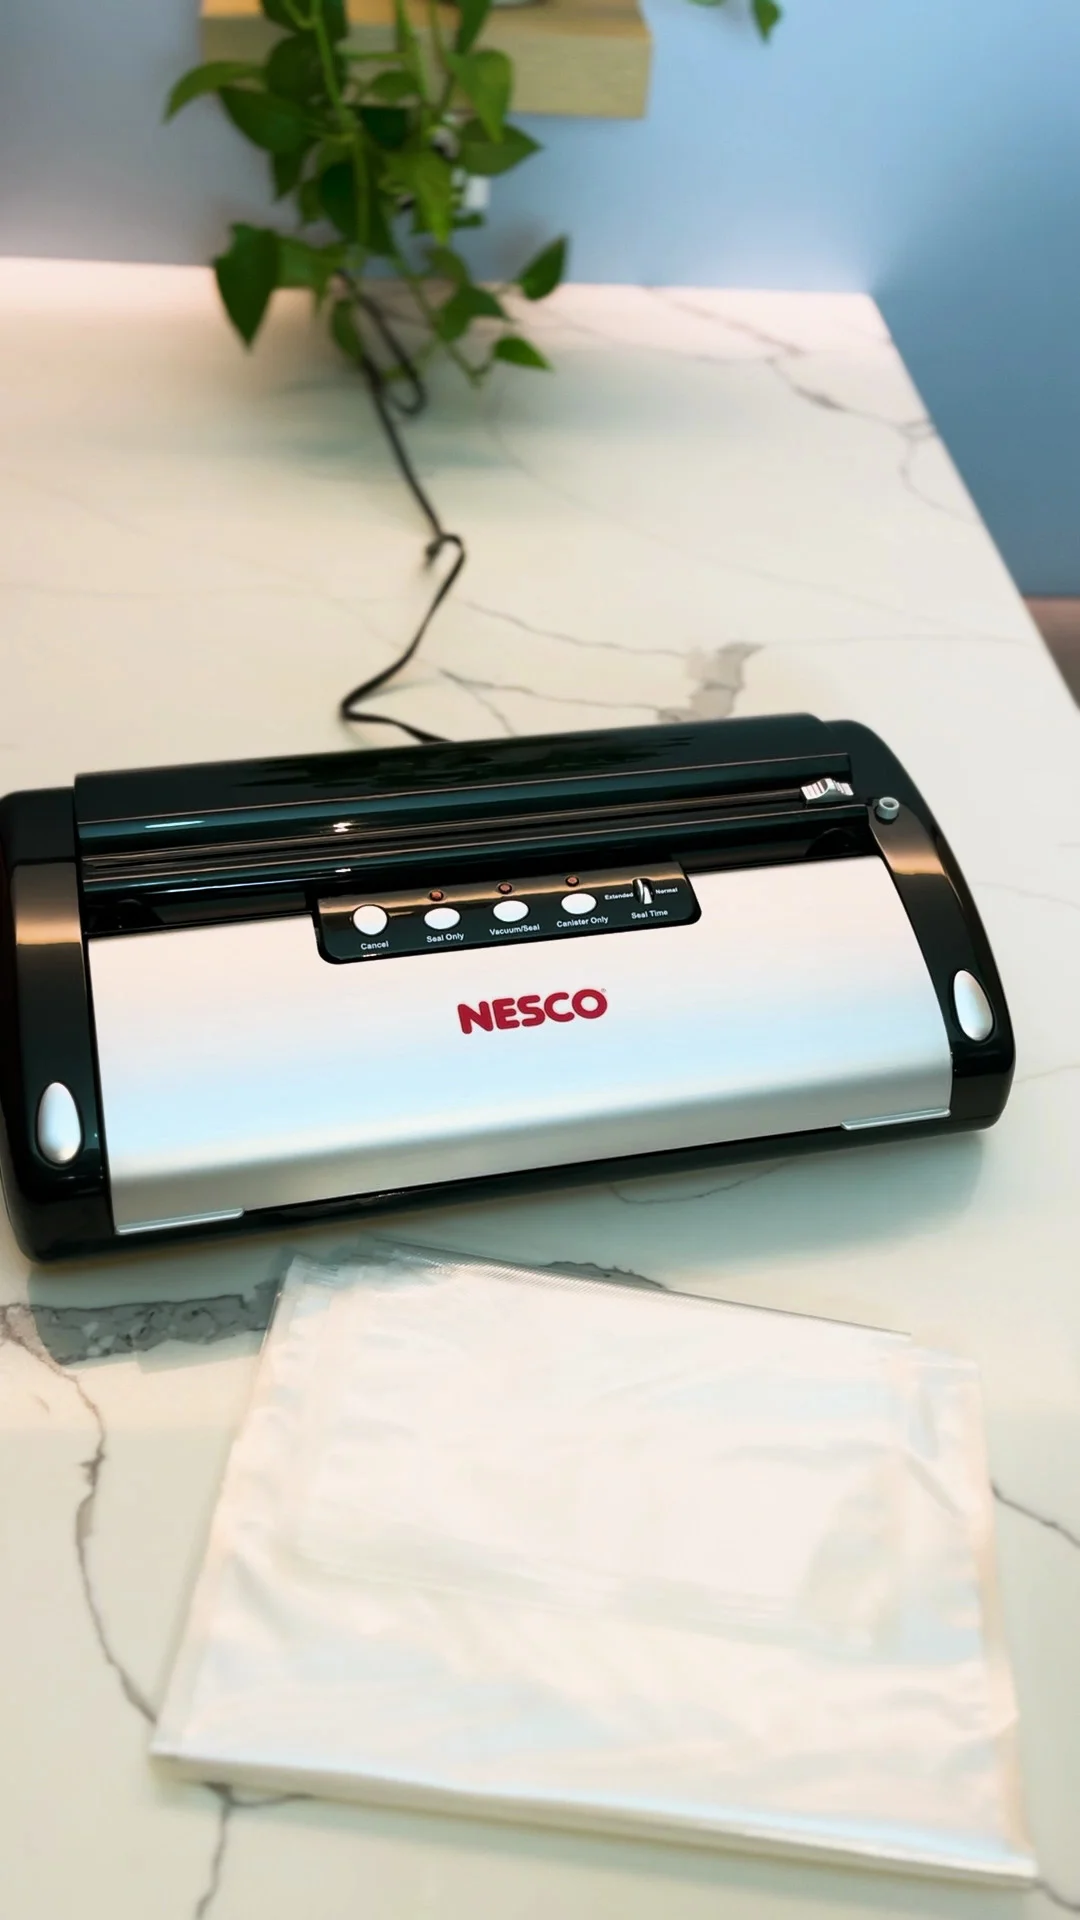 Nesco American Harvest Commercial Grade Vacuum Sealer, Black